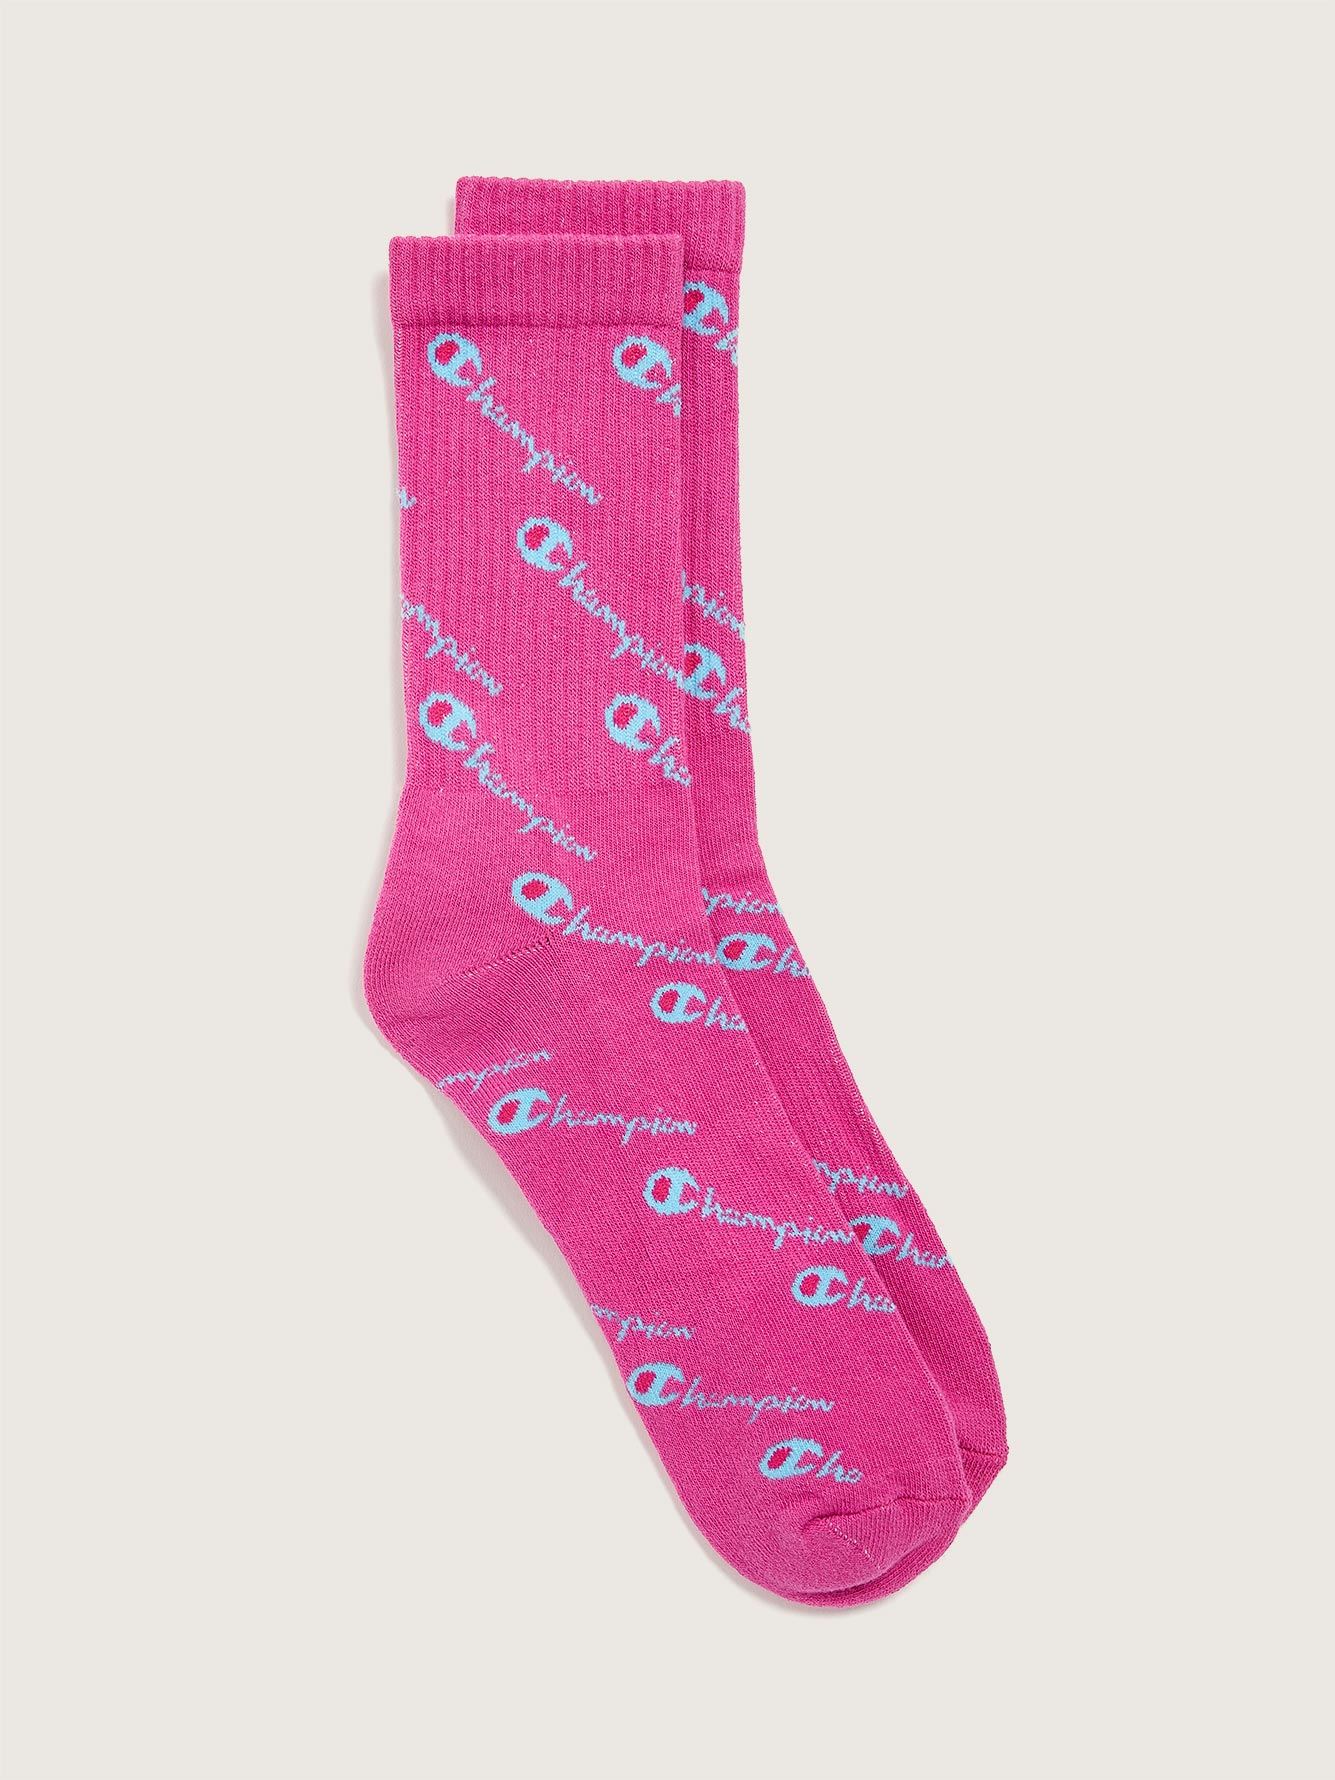 champion pink socks